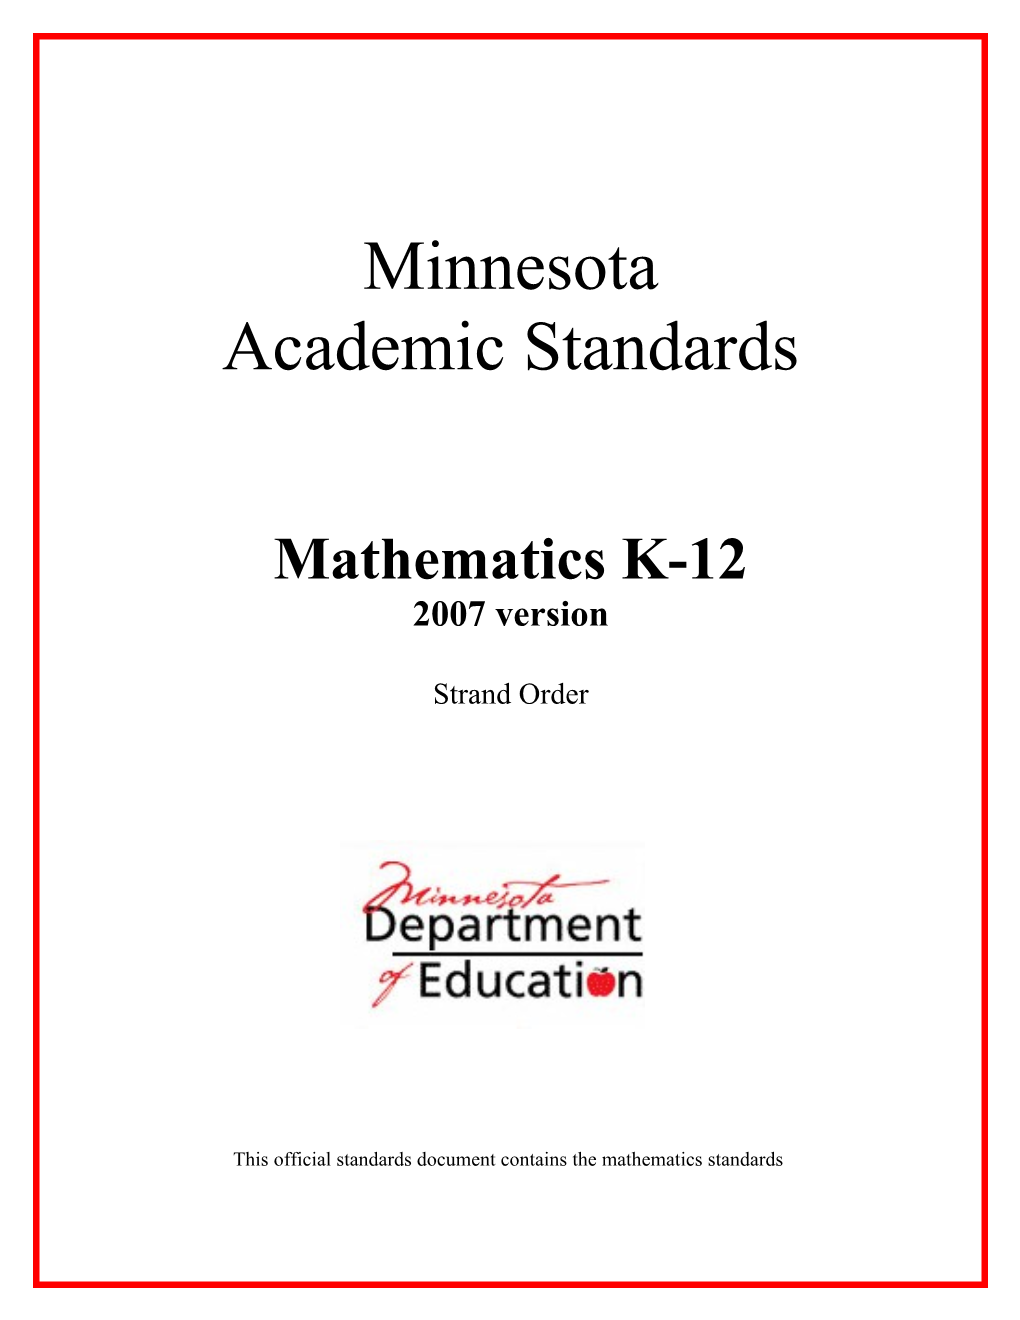 Minnesota K-12 Academic Standards in Mathematics